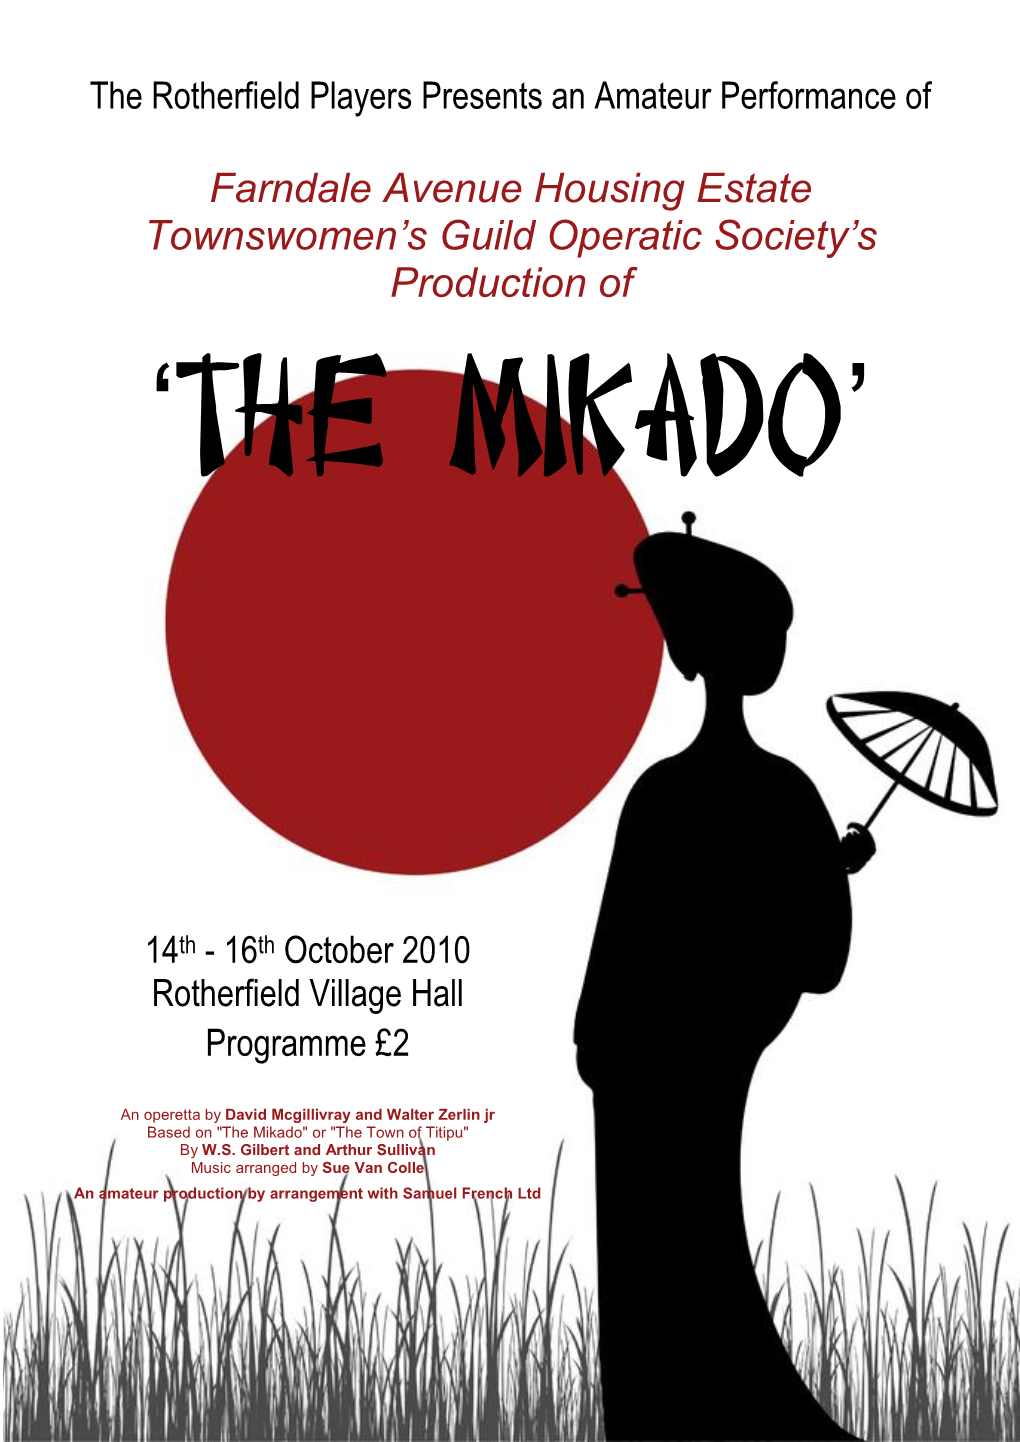 Farndale Avenue Housing Estate Townswomen's Guild Operatic Society's Production of 'The Mikado'